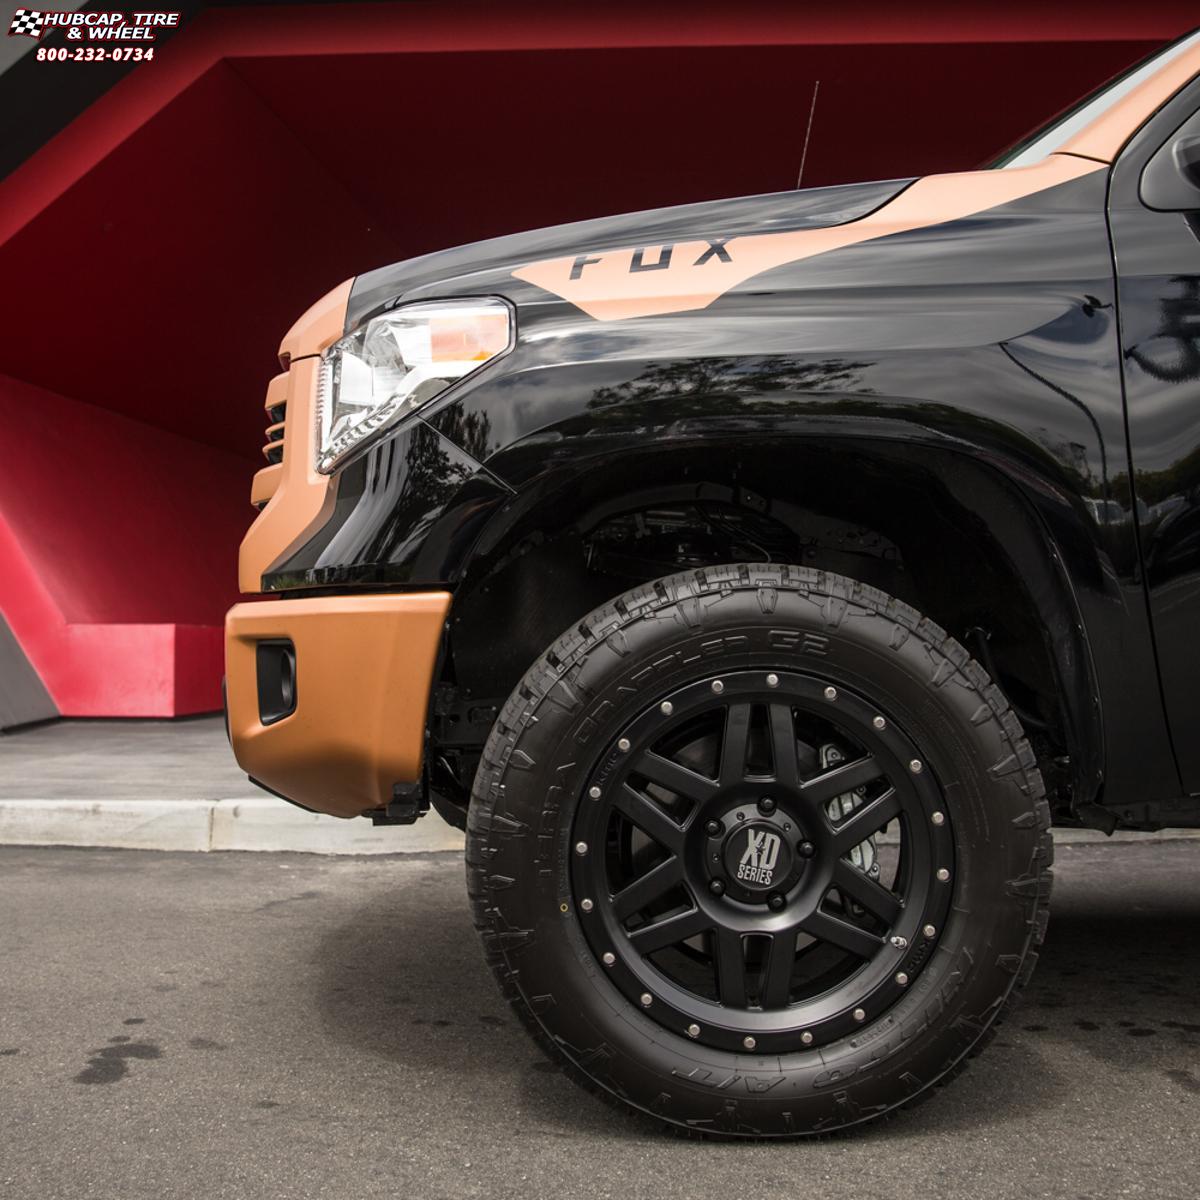 vehicle gallery/2016 toyota tundra xd series xd128 machete x  Satin Black wheels and rims